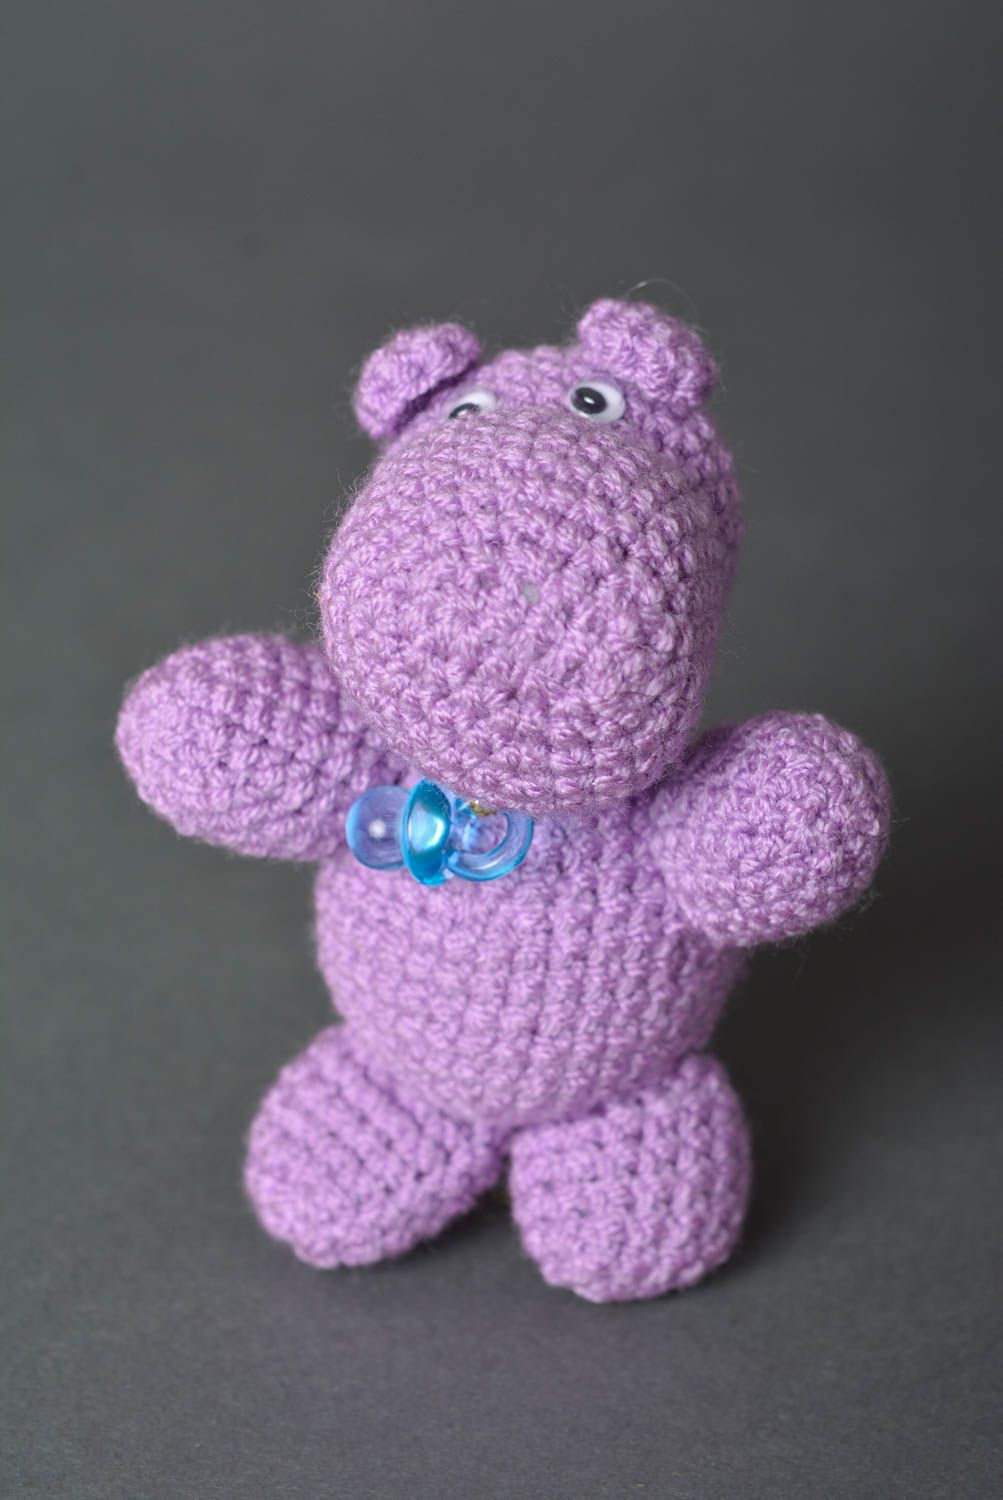 Handmade designer crocheted toy unusual lilac animal toy cute soft toy photo 1